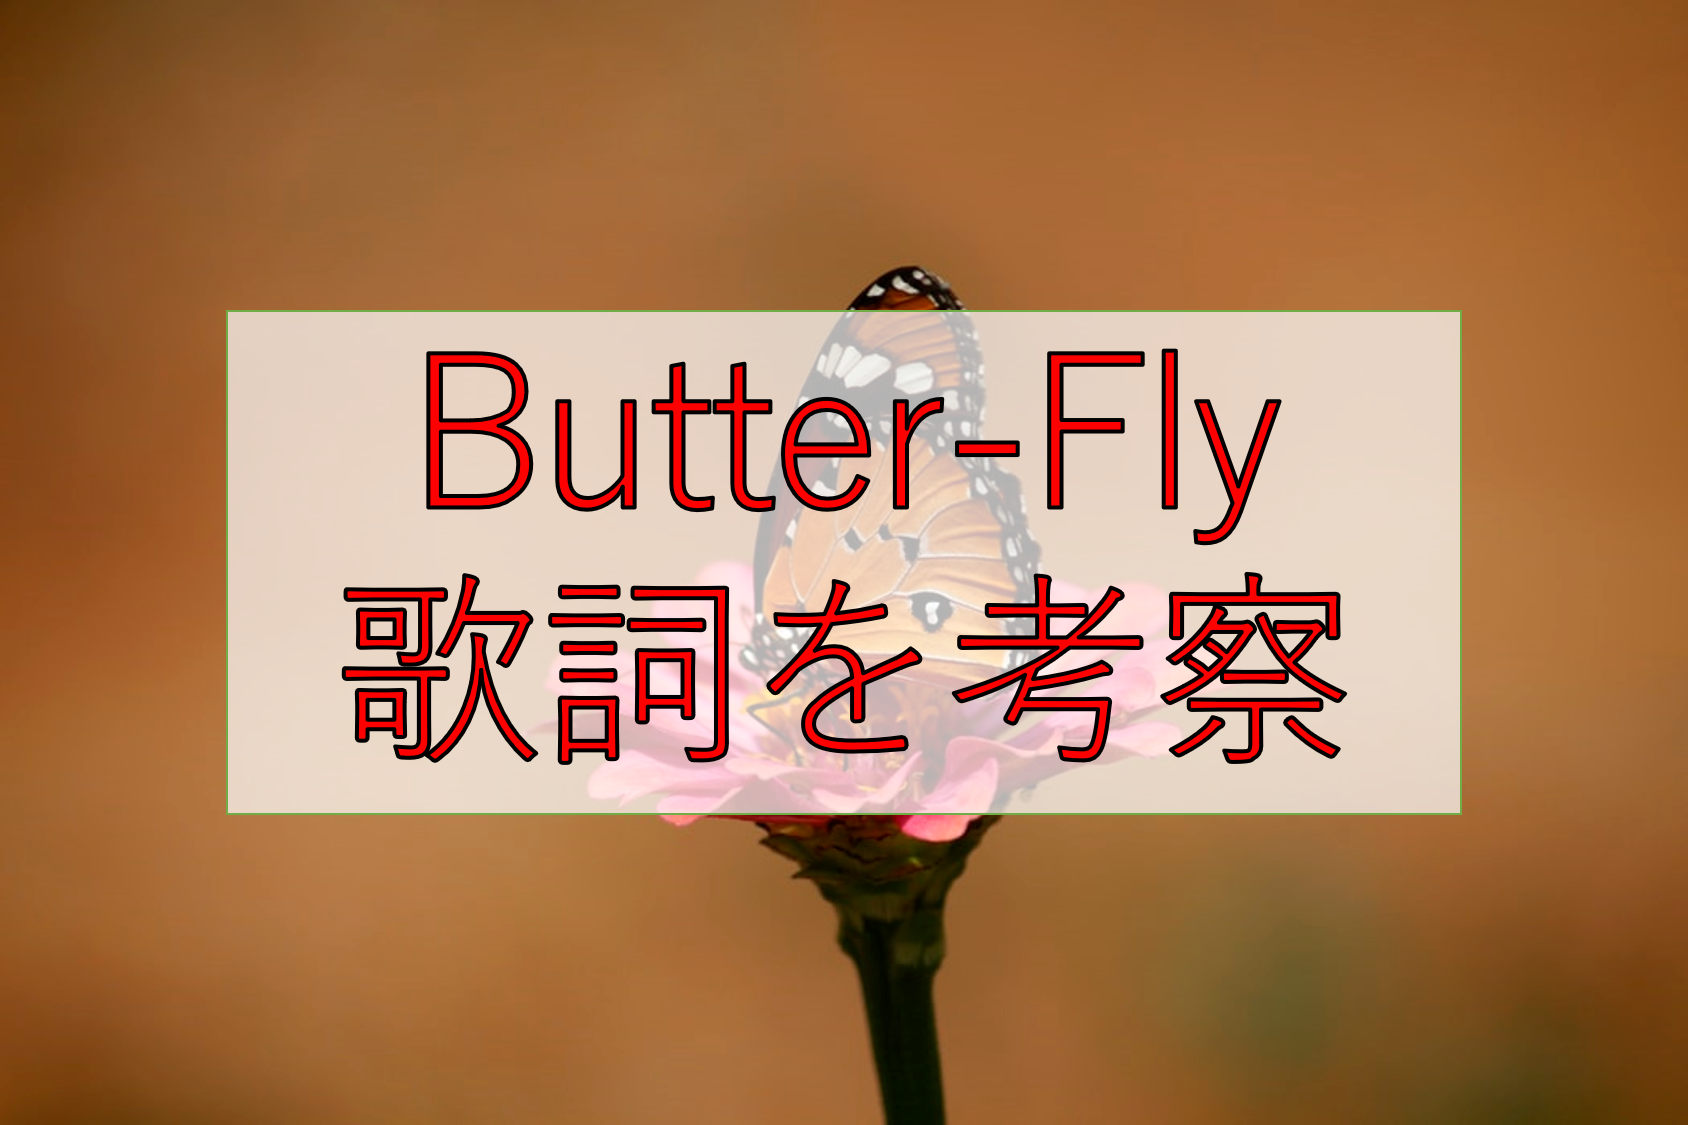 Butter Fly の意味を考察 デジモンアドベンチャー Op